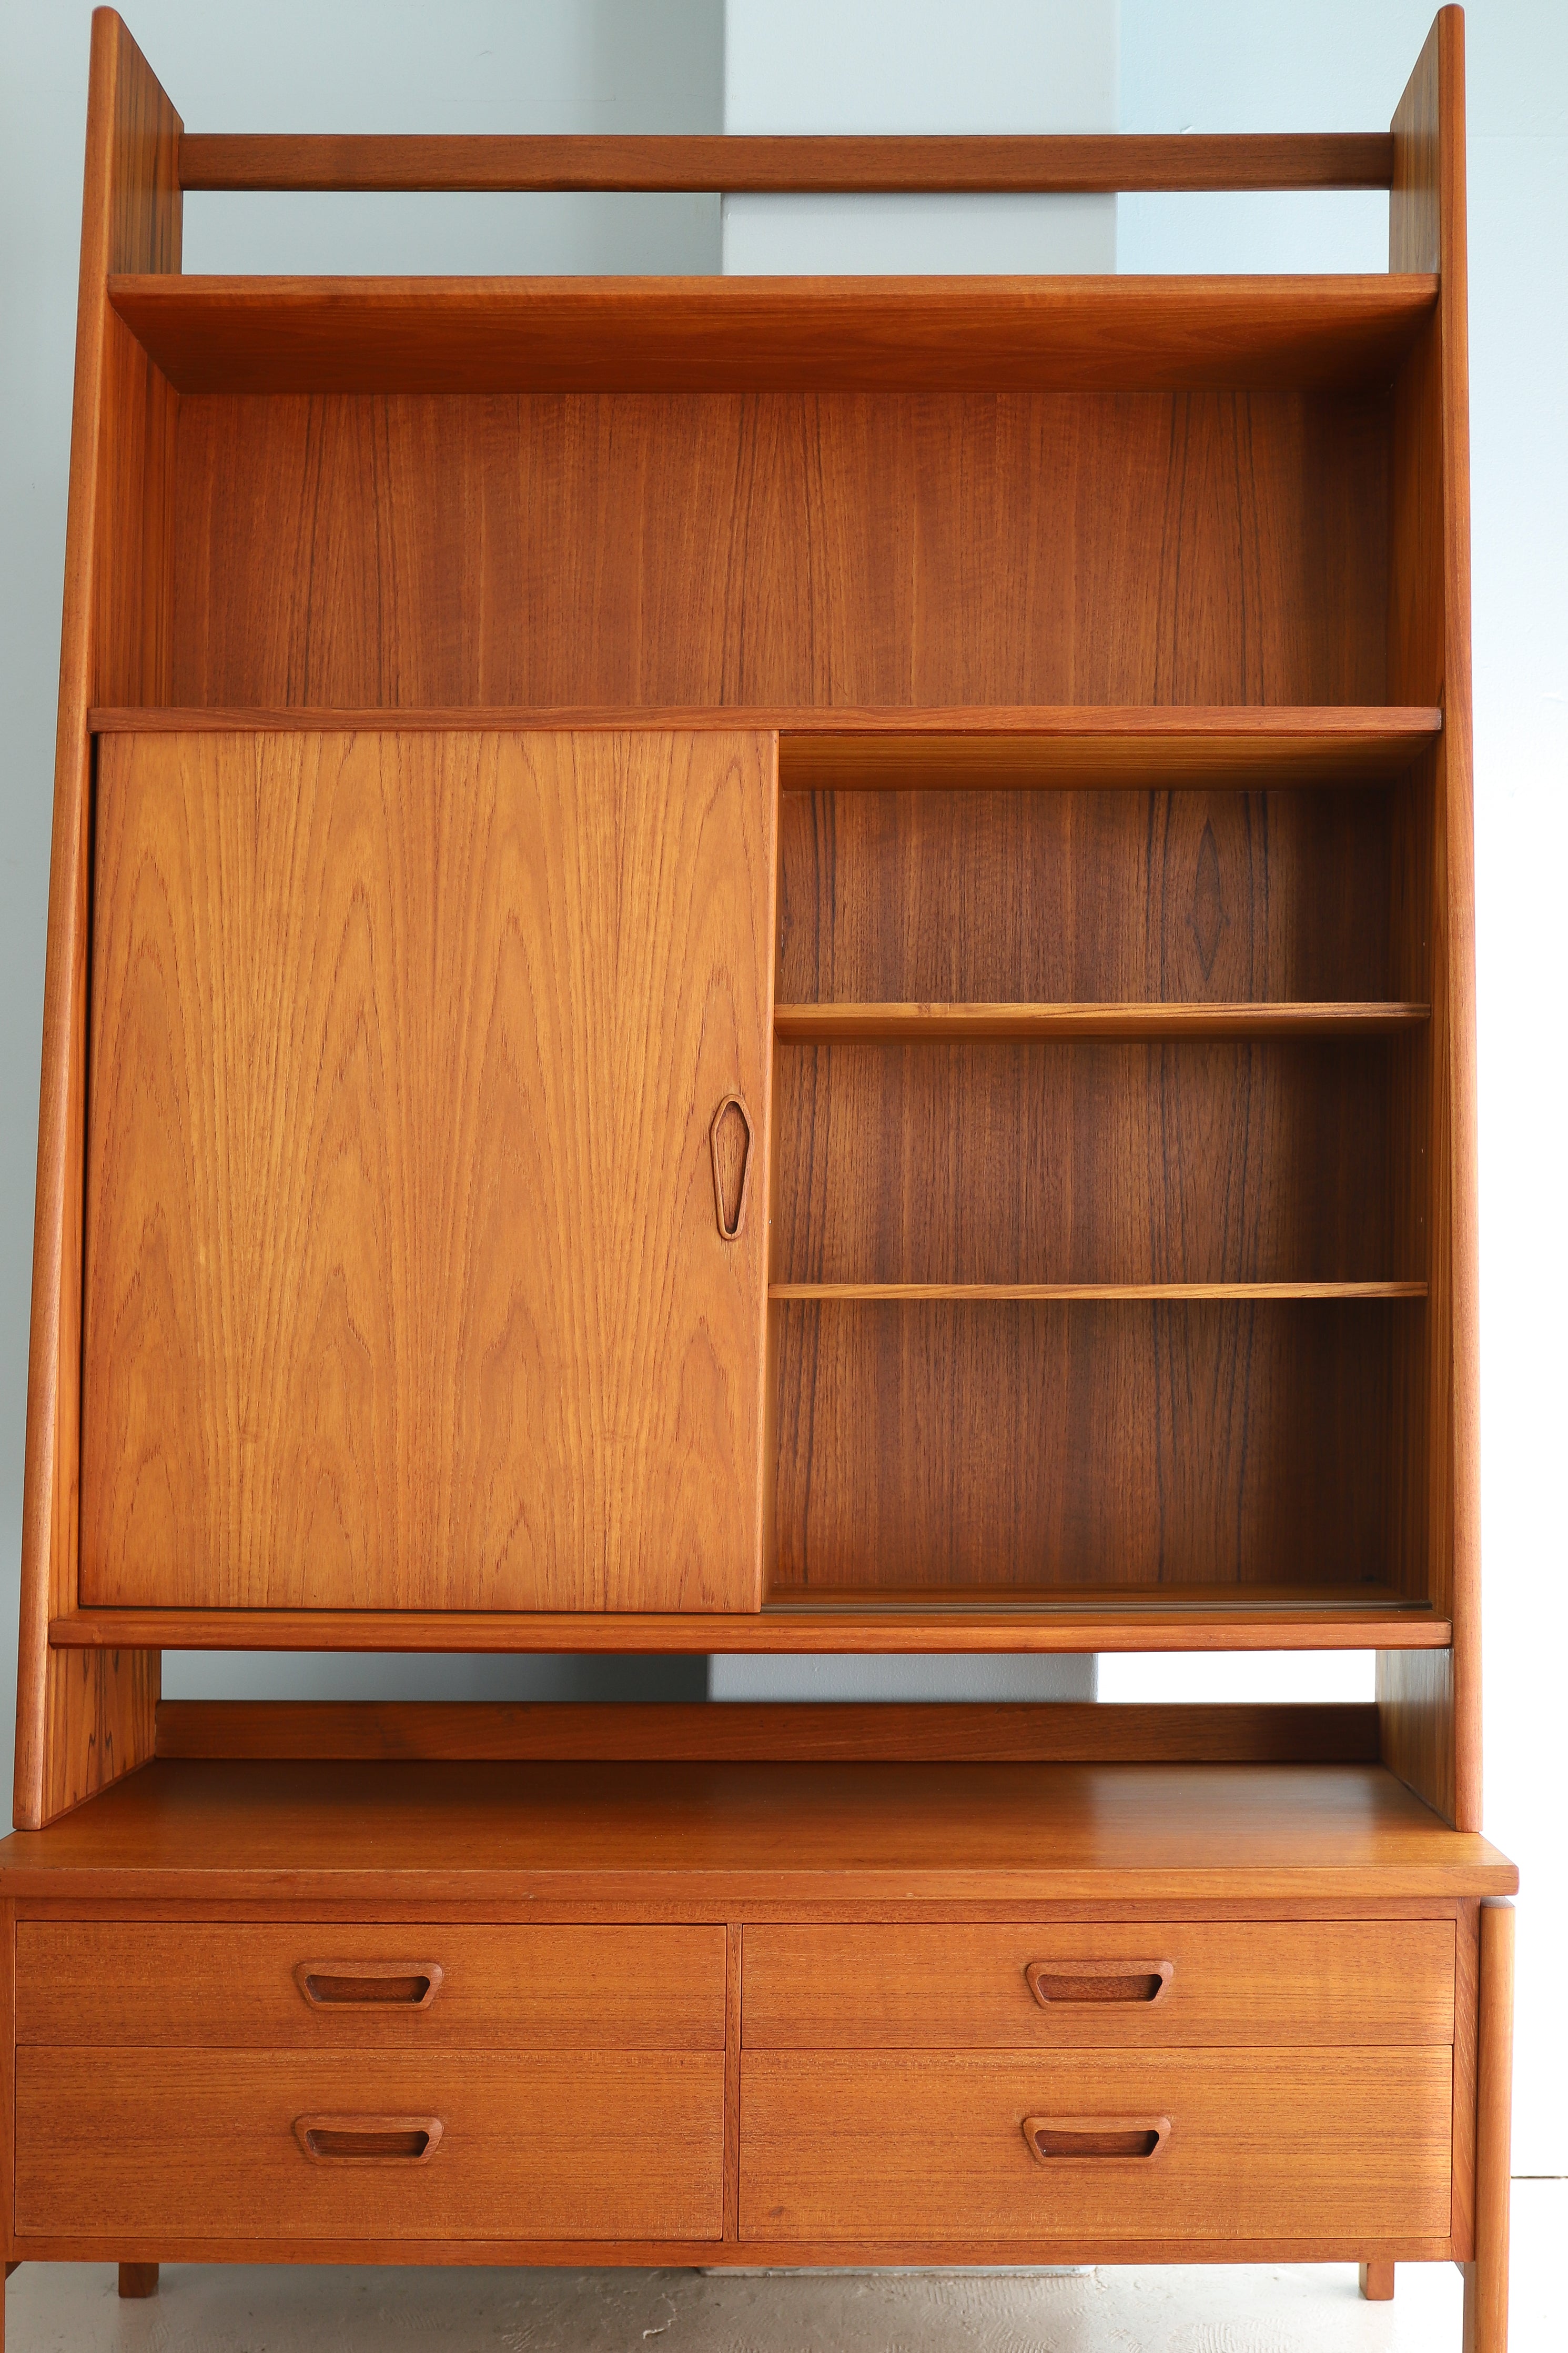 Danish Vintage High Shelf Cabinet/デンマークヴィンテージ ハイシェルフ キャビネット 収納 北欧家具